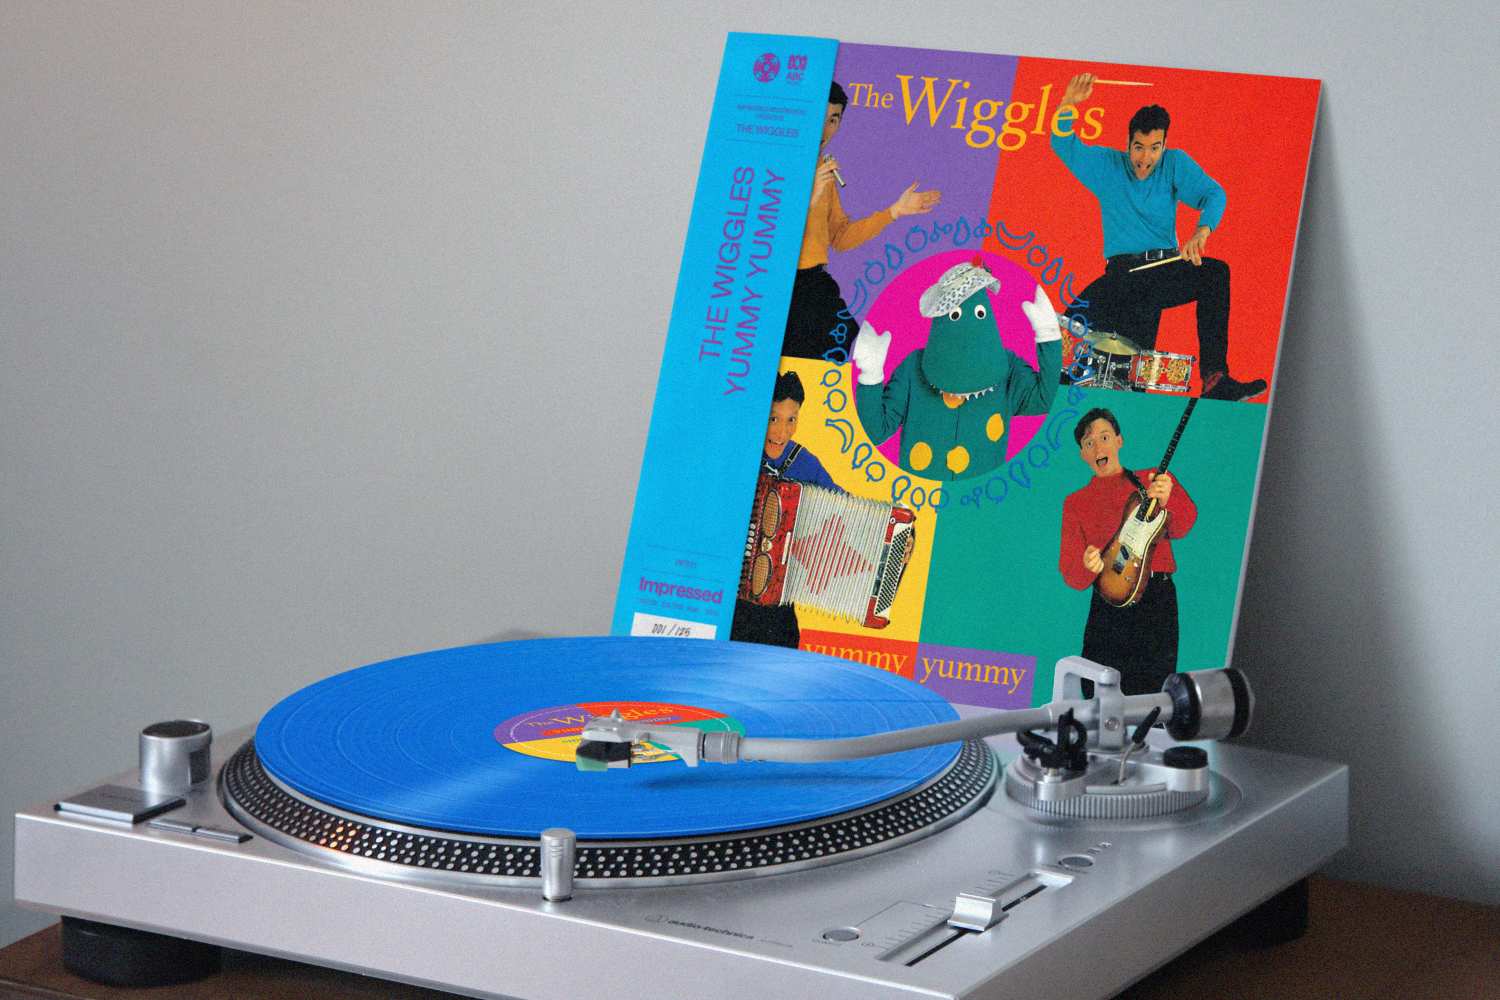 The Wiggles vinyl